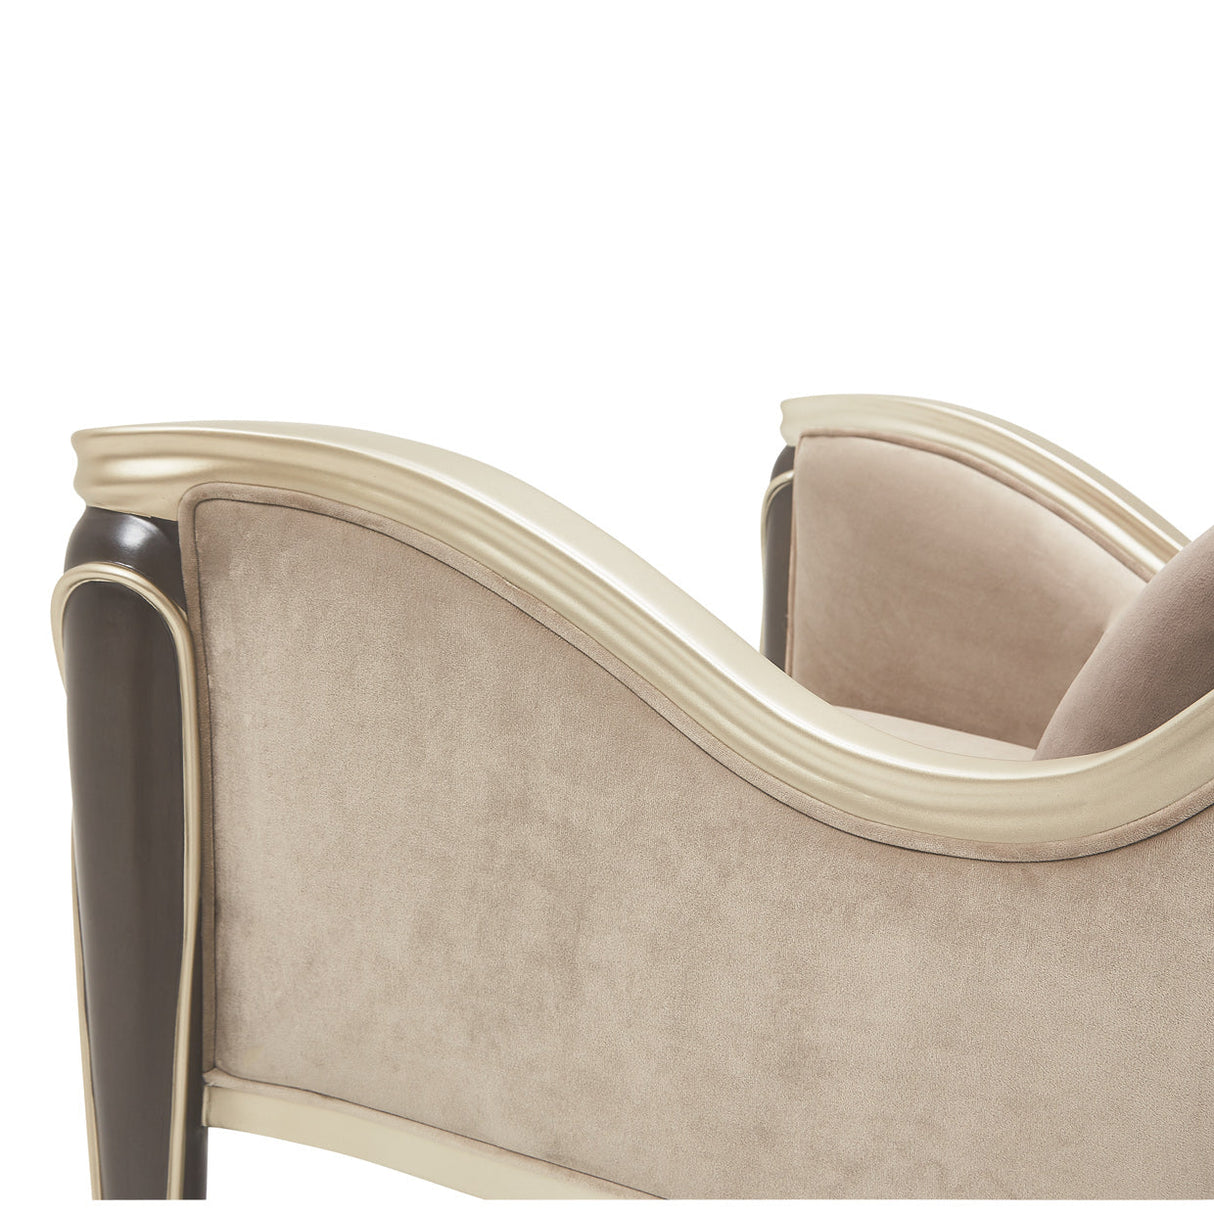 Michael Amini Villa Cherie Hazelnut Accent Chair - Home Elegance USA